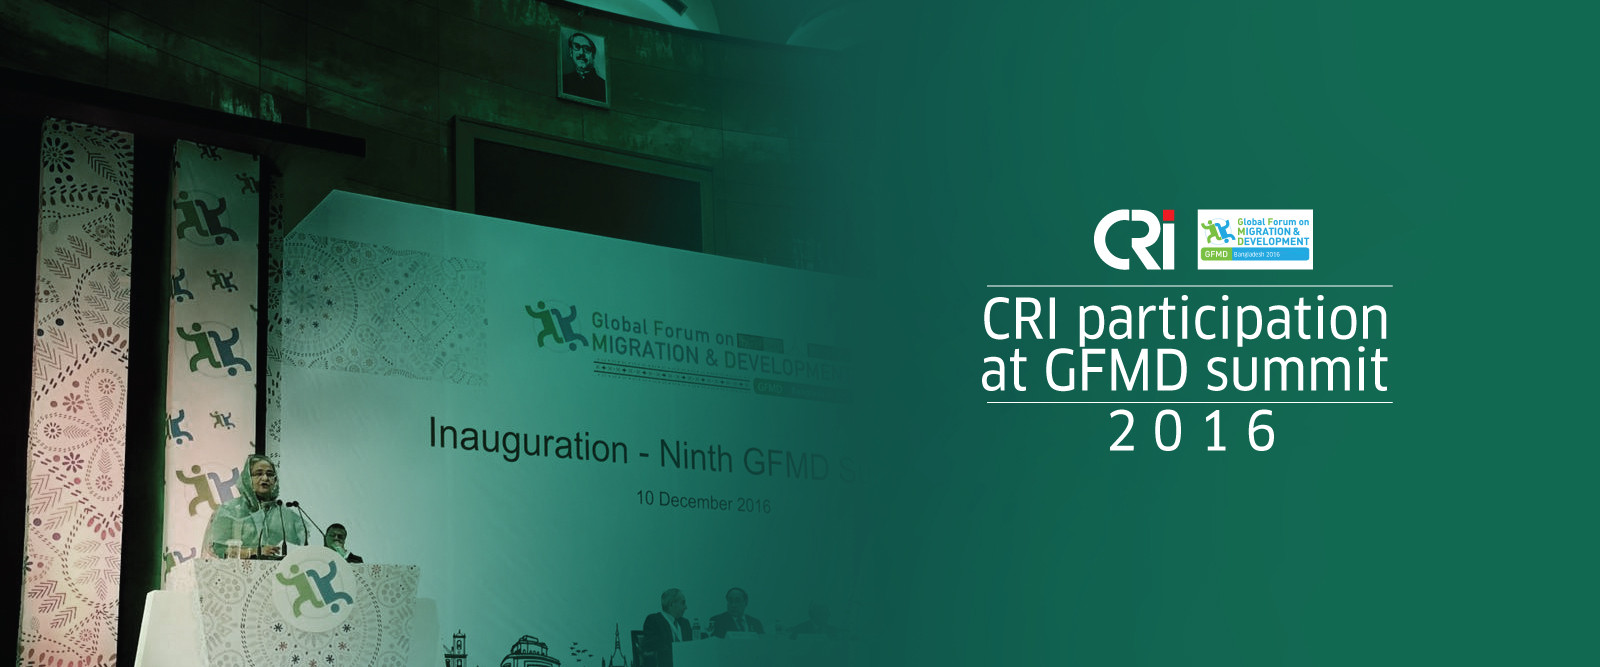 CRI Participation at GFMD Summit 2016